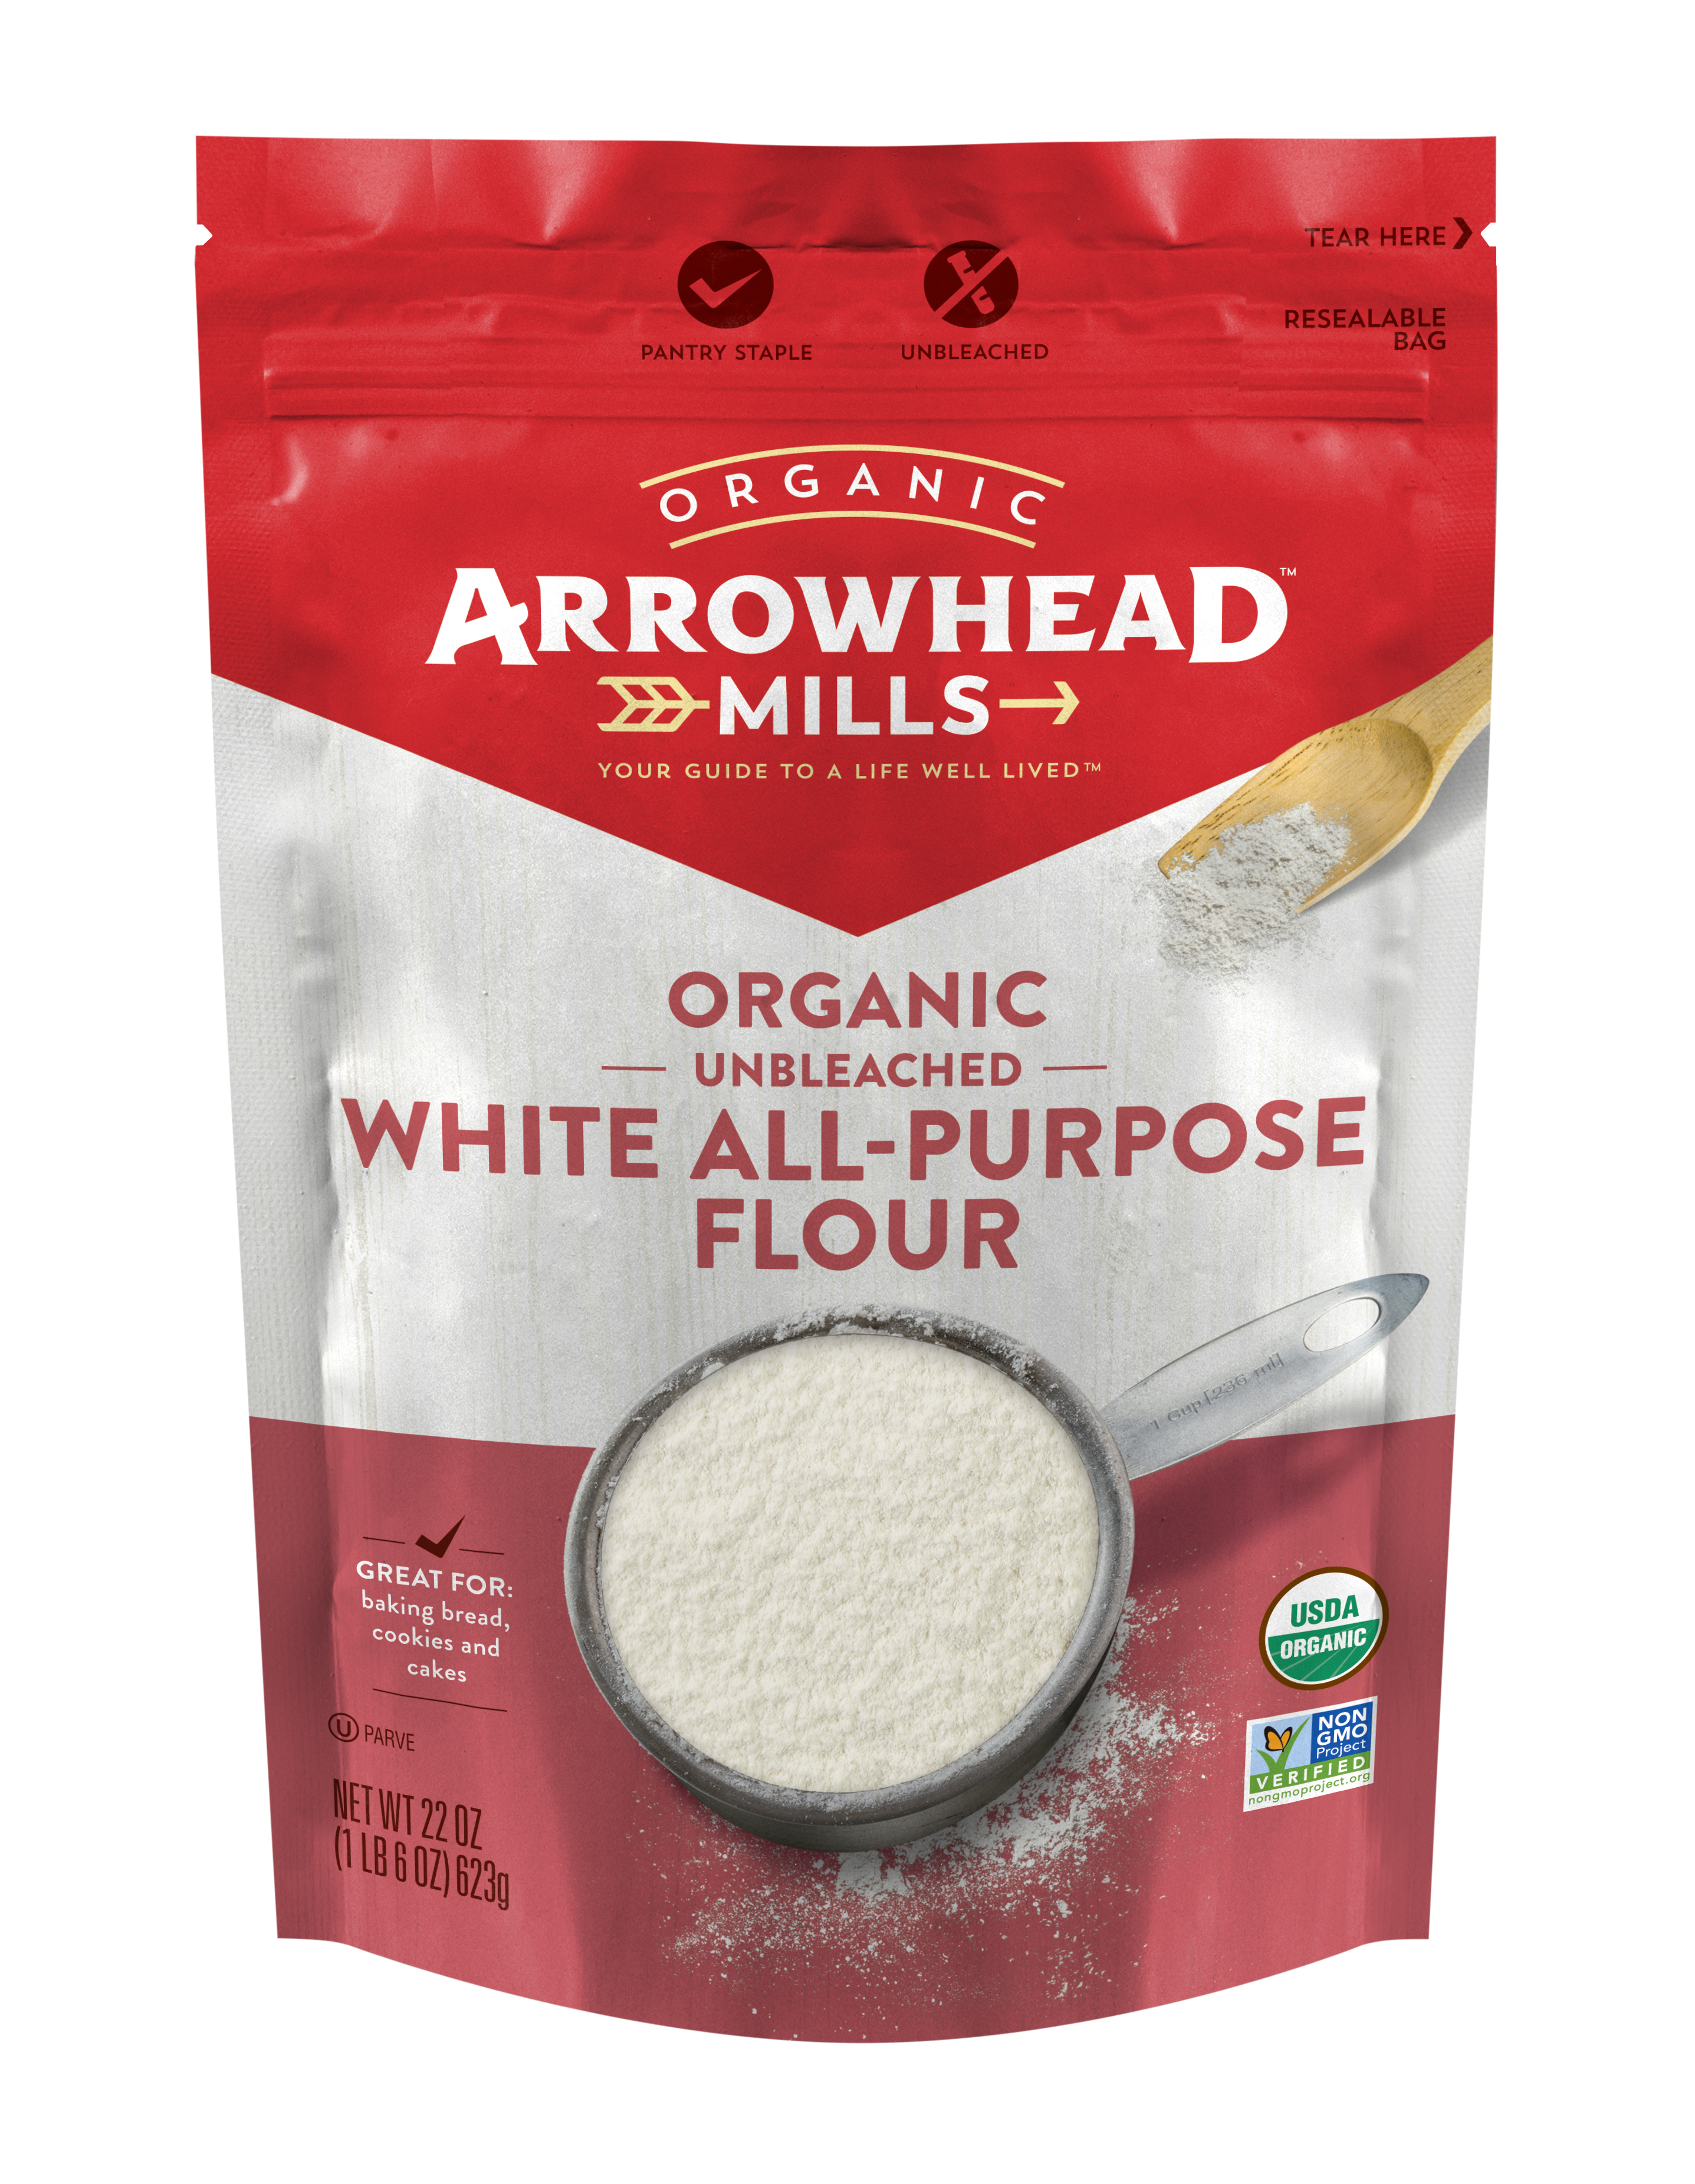 Arrowhead Mills White All-Purpose Flour 6 units per case 22.0 oz